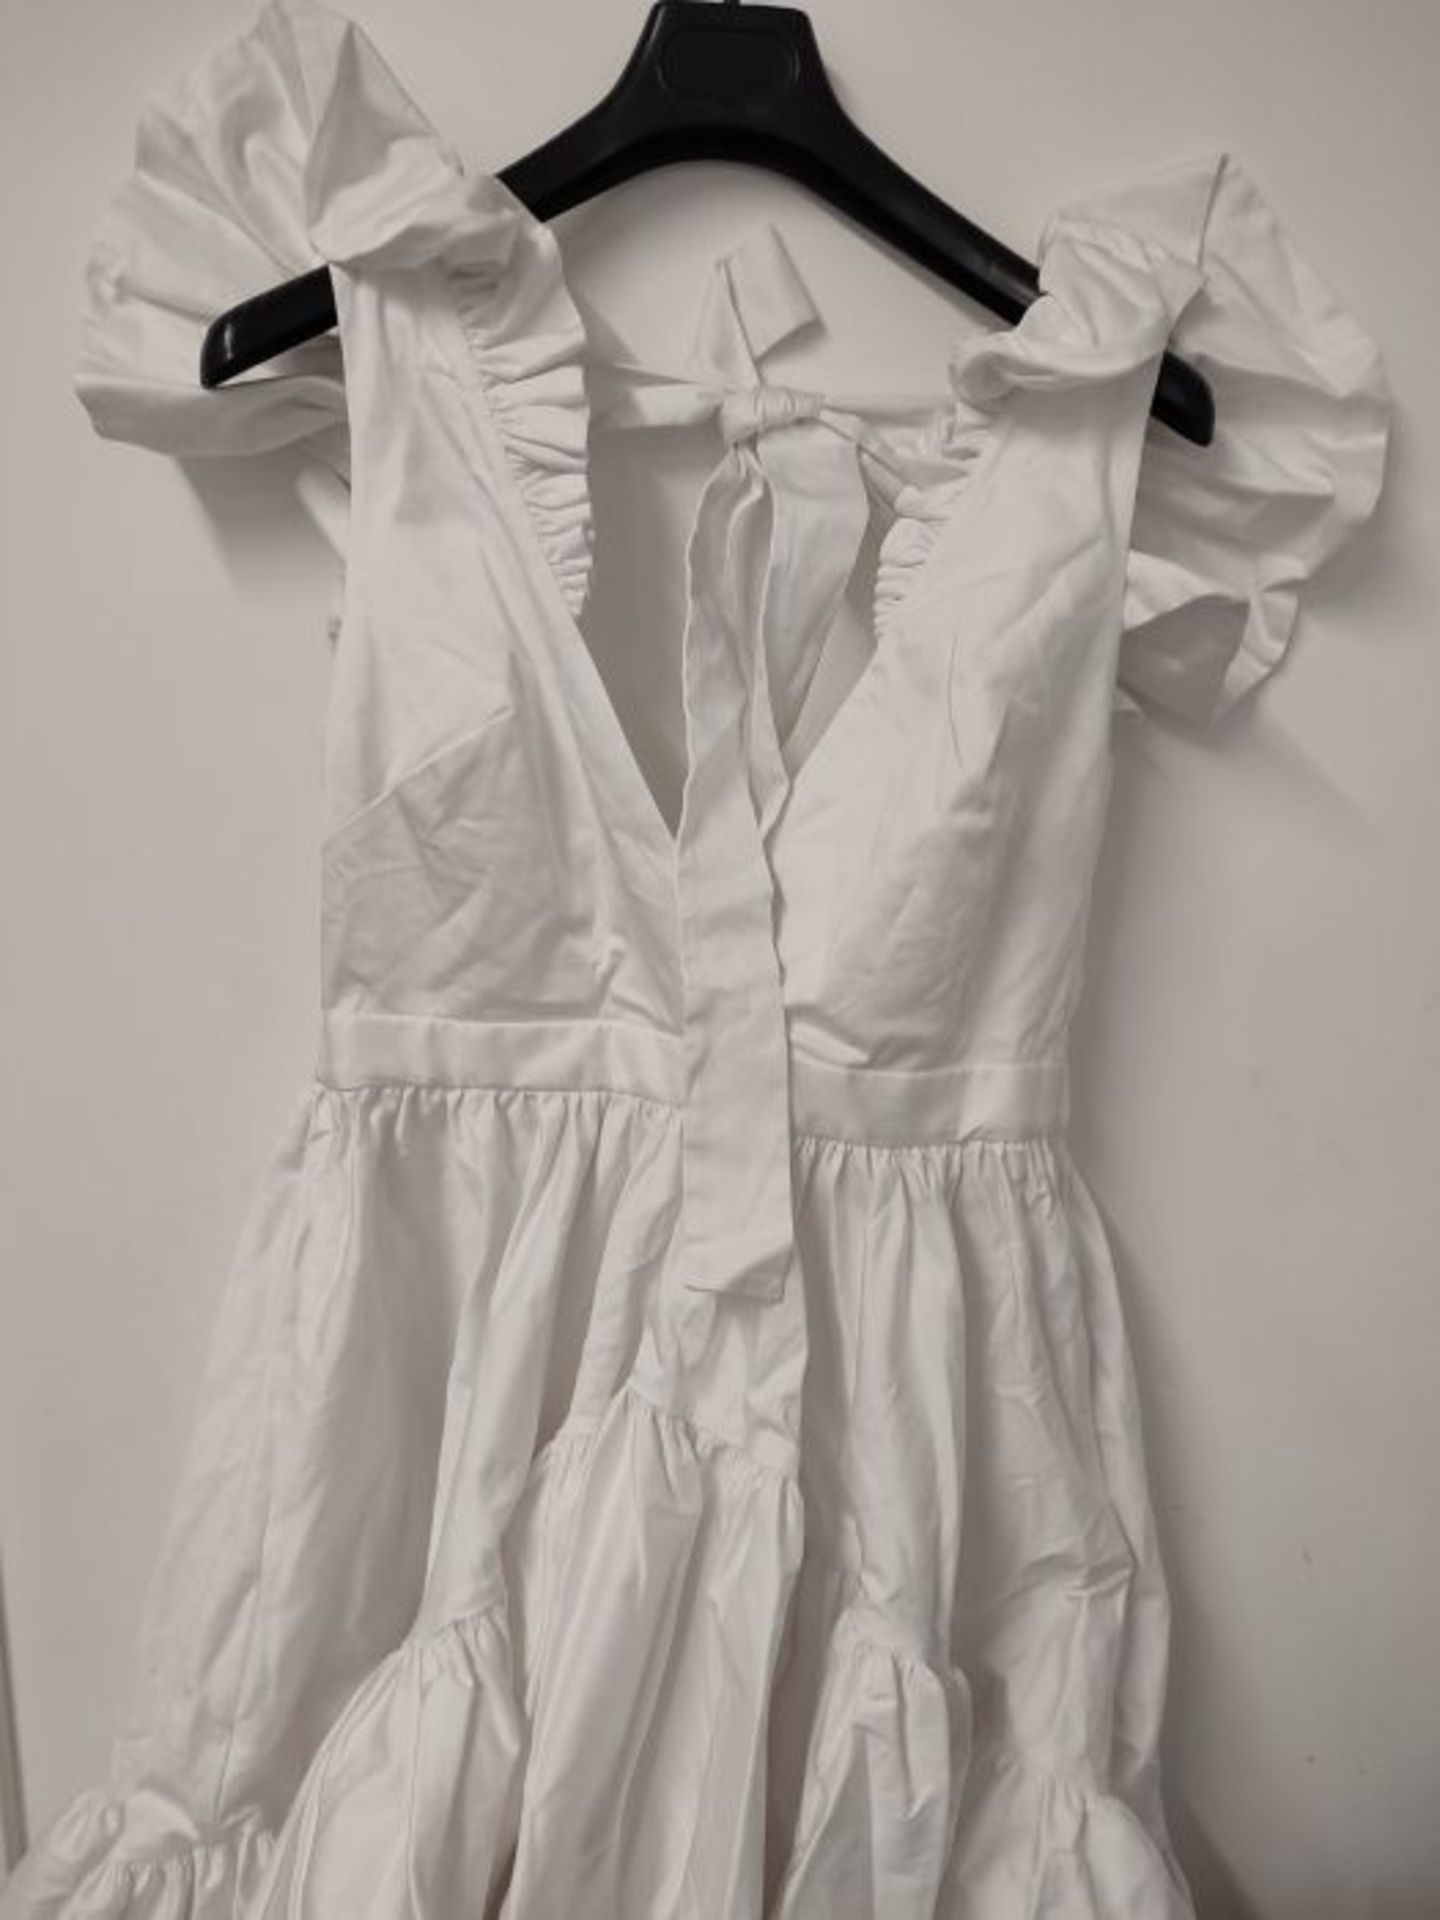 RRP £169.00 Making the Cut Season 3 Episode 1 Winning Look Sienna's Ruffle High-Low Dress, White, - Image 2 of 2